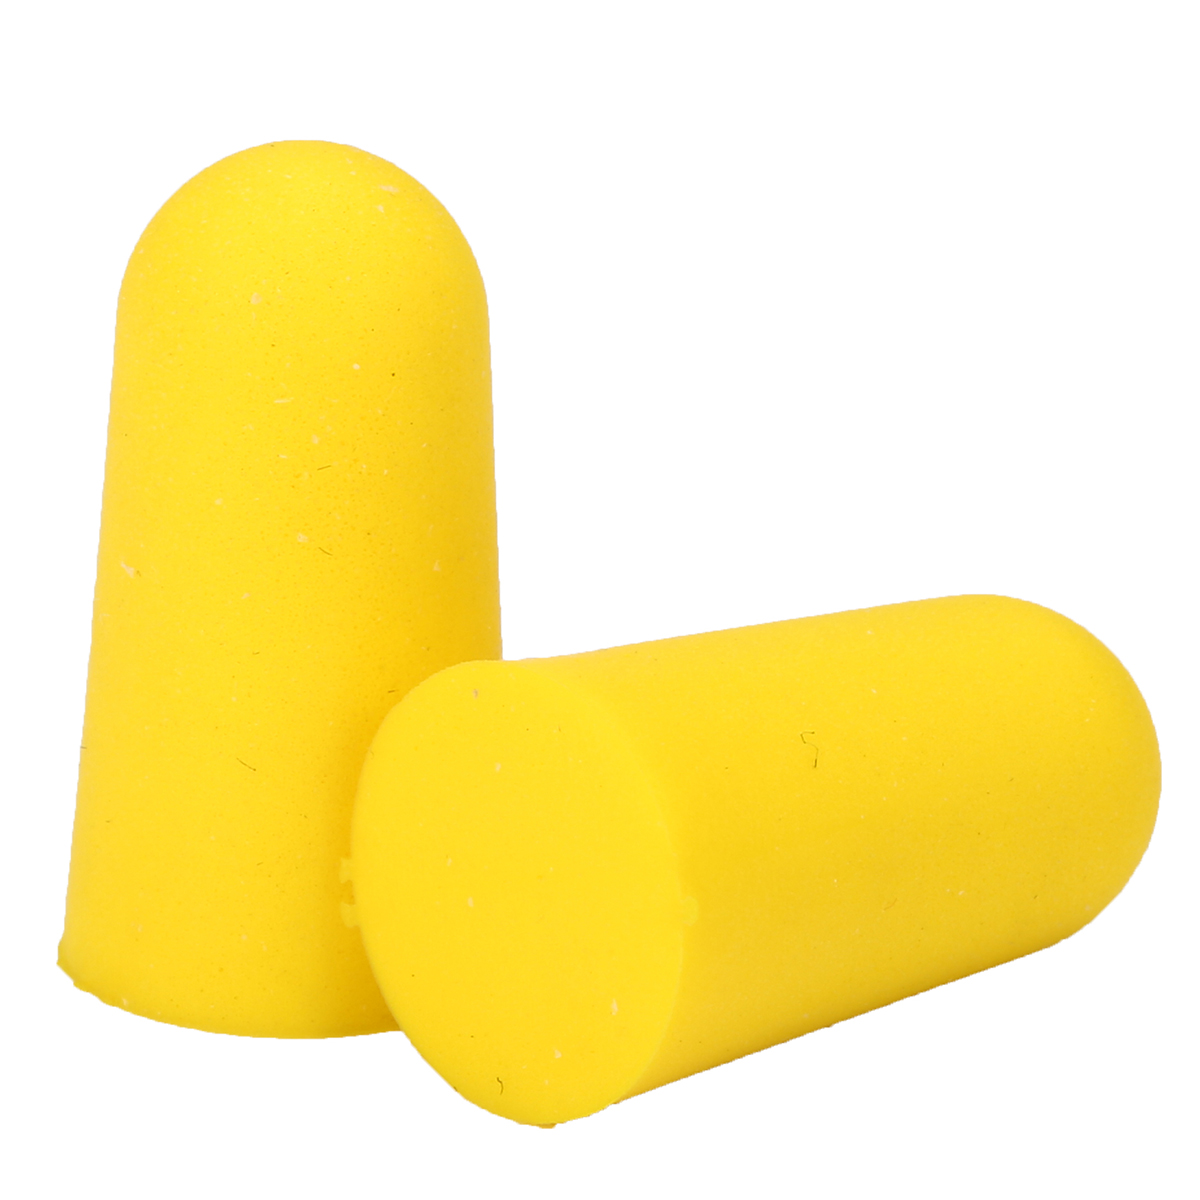 NASUM-4-Pairs-Ear-Plugs-Soft-Sponge-Ear-Plugs-Comfortable-and-Silent-Hearing-Protection-Sleeping-Ear-1891730-10